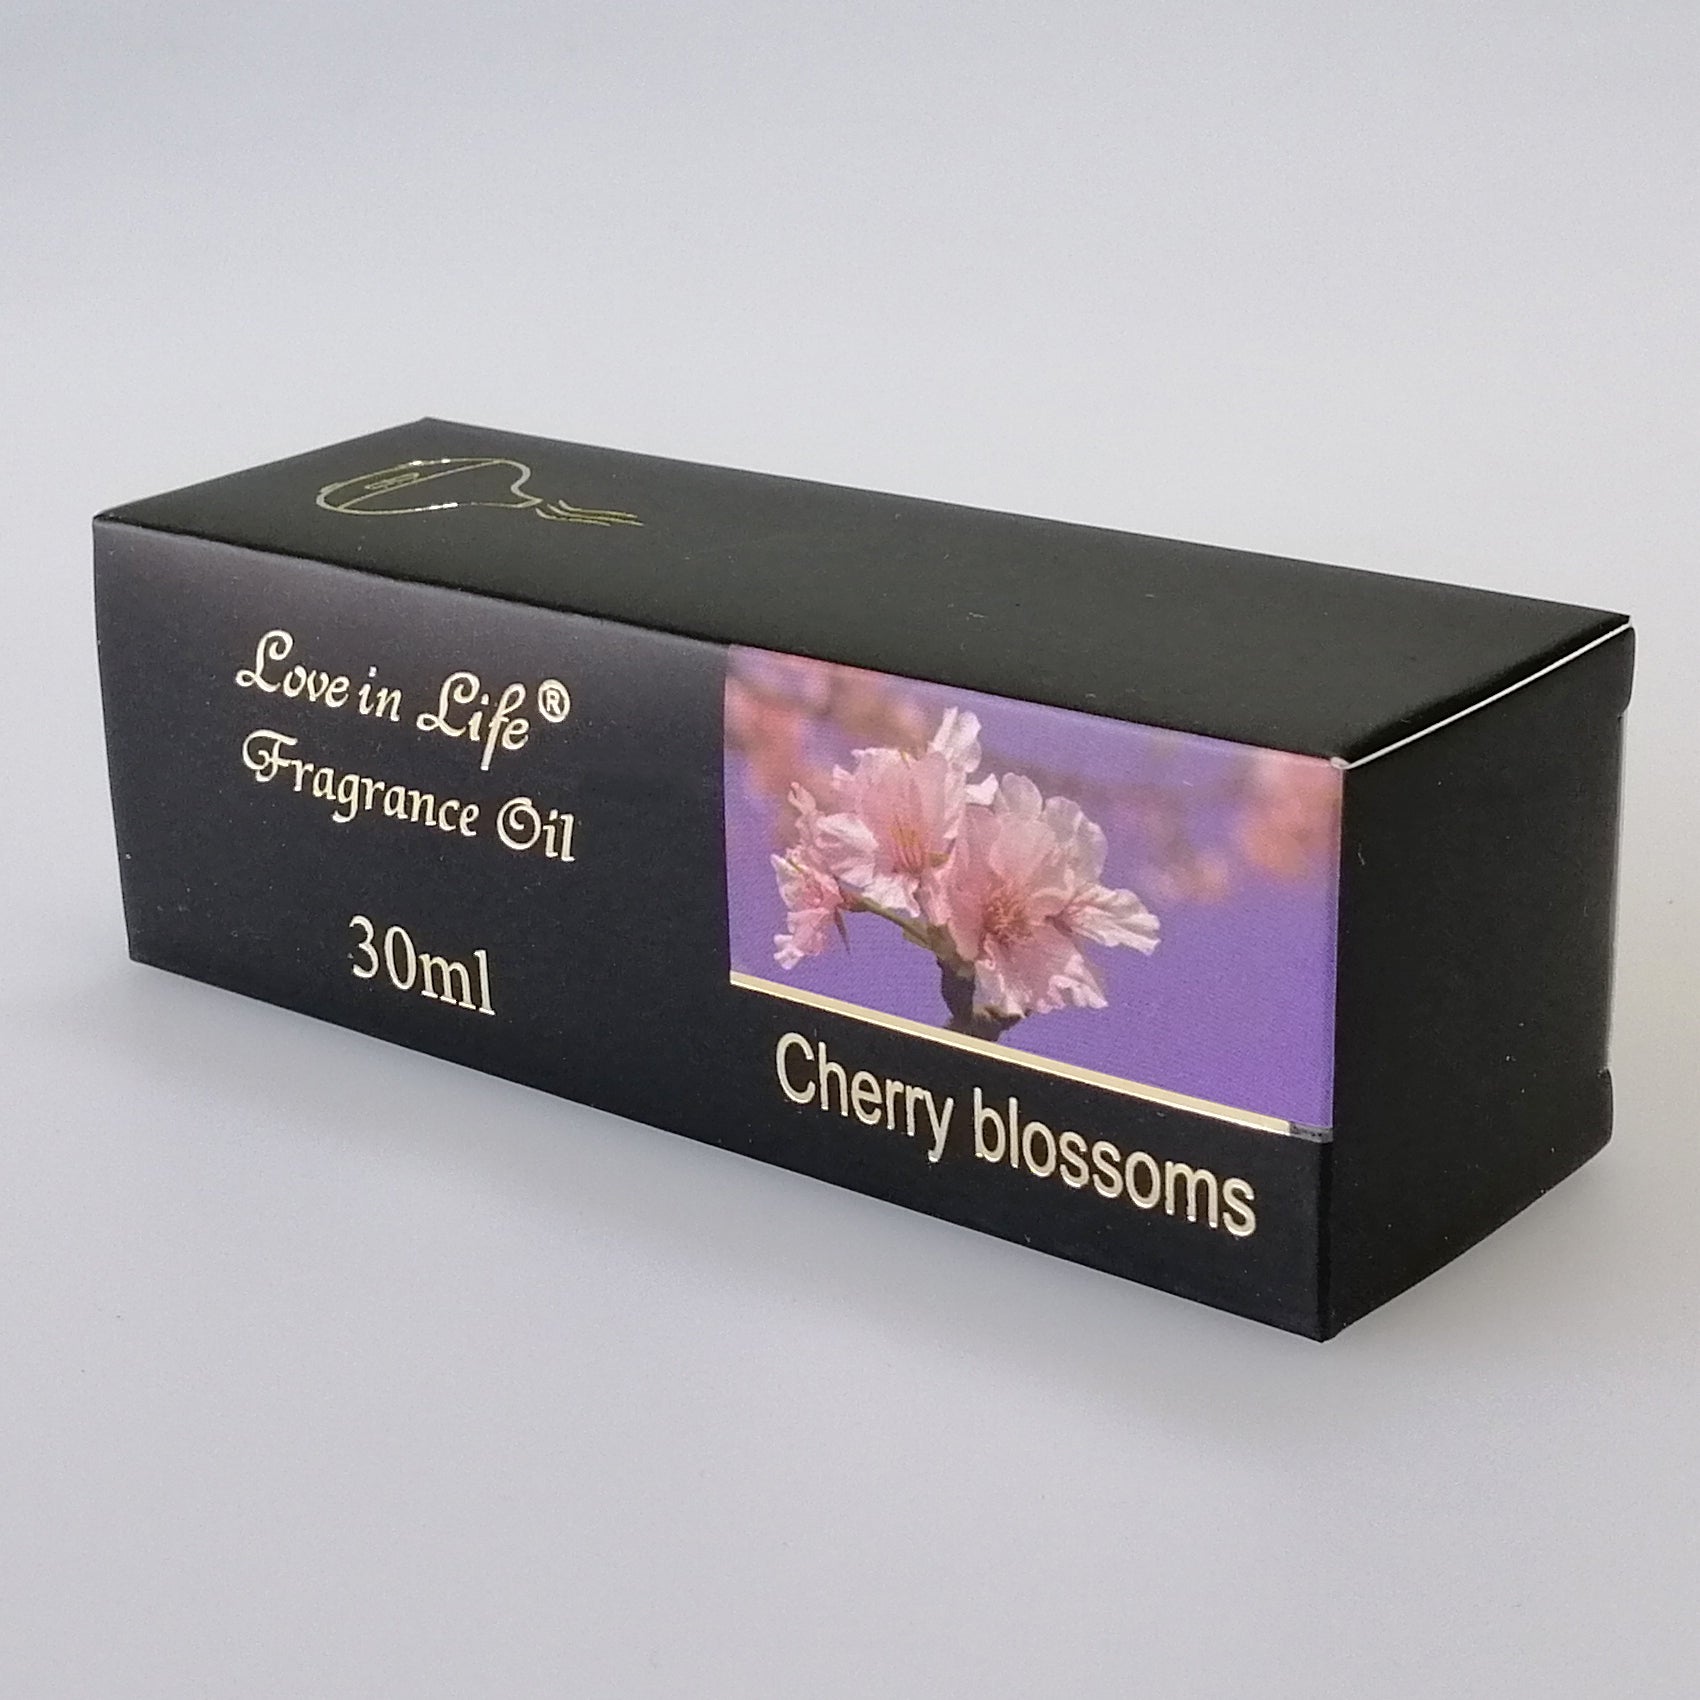 Love in Life - Fragrance Oil - Cherry Blossoms - 30ml